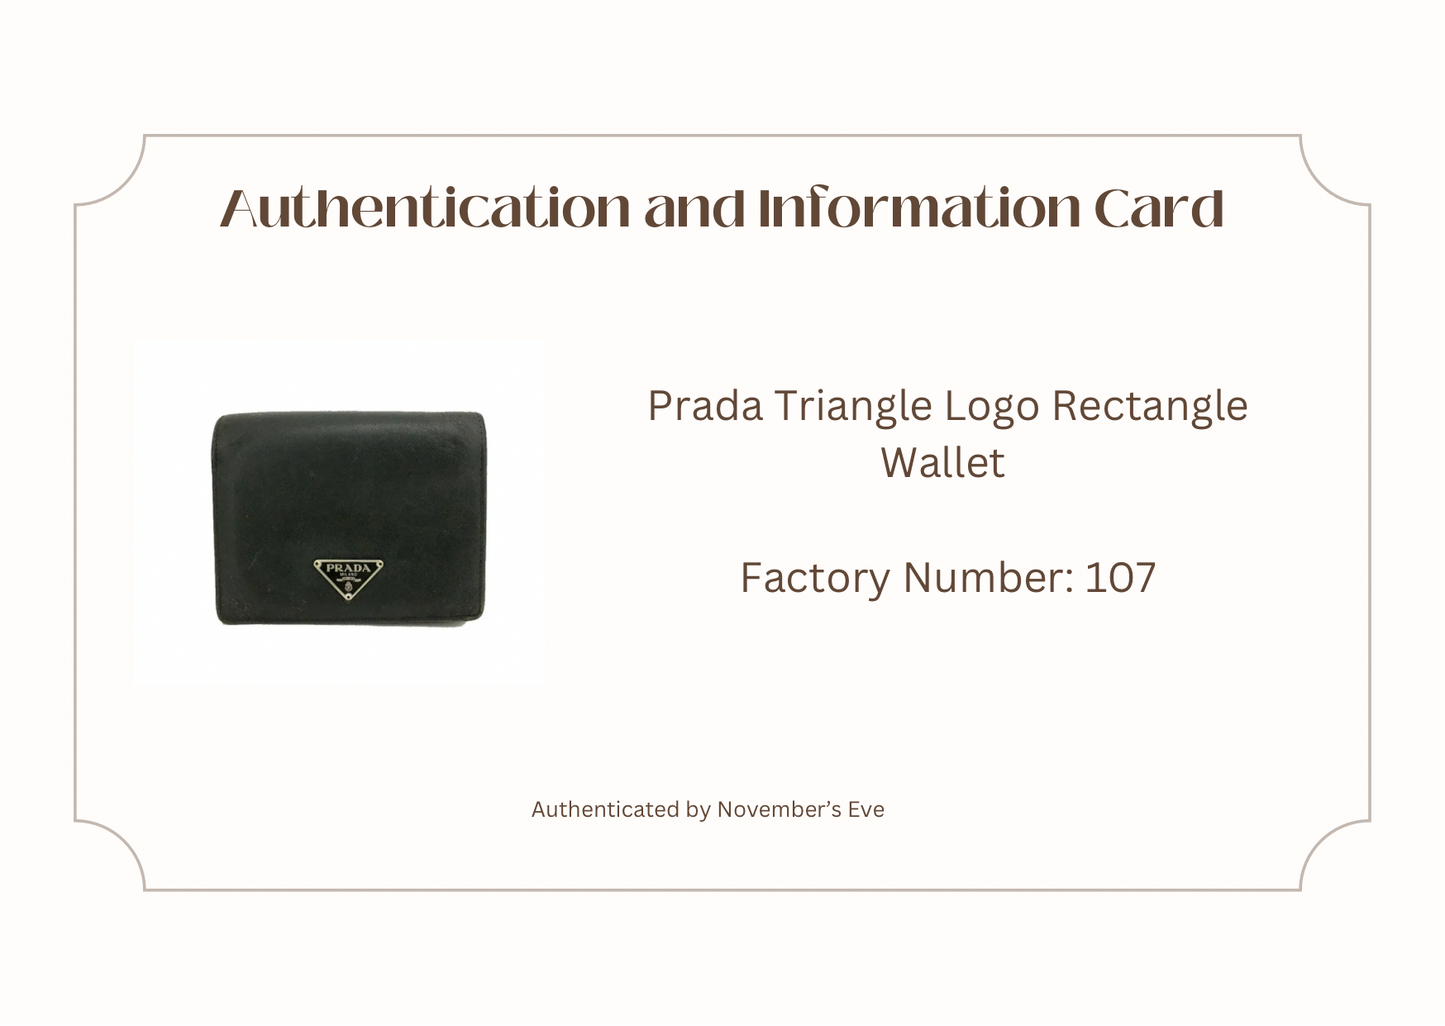 Prada Triangle Logo Wallet